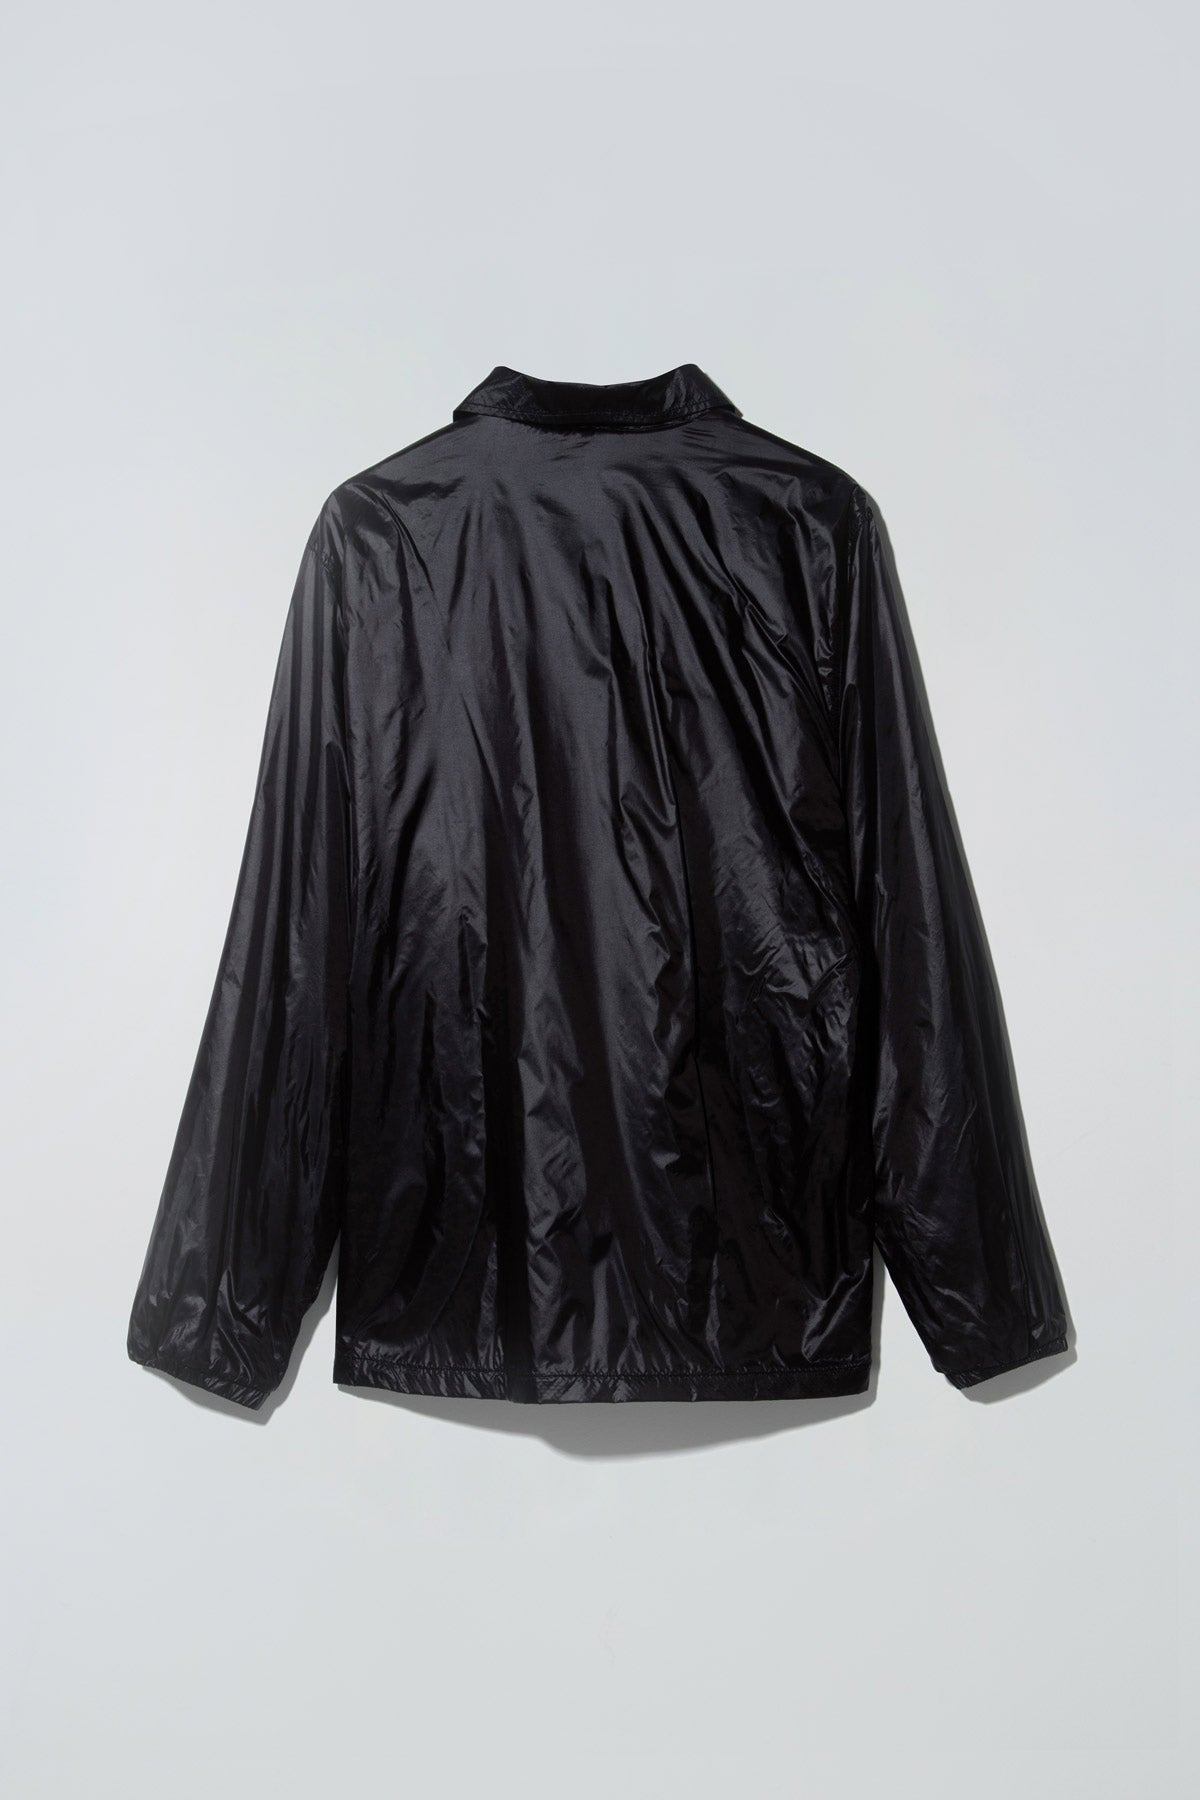 Rainfall Shirt Jacket Black